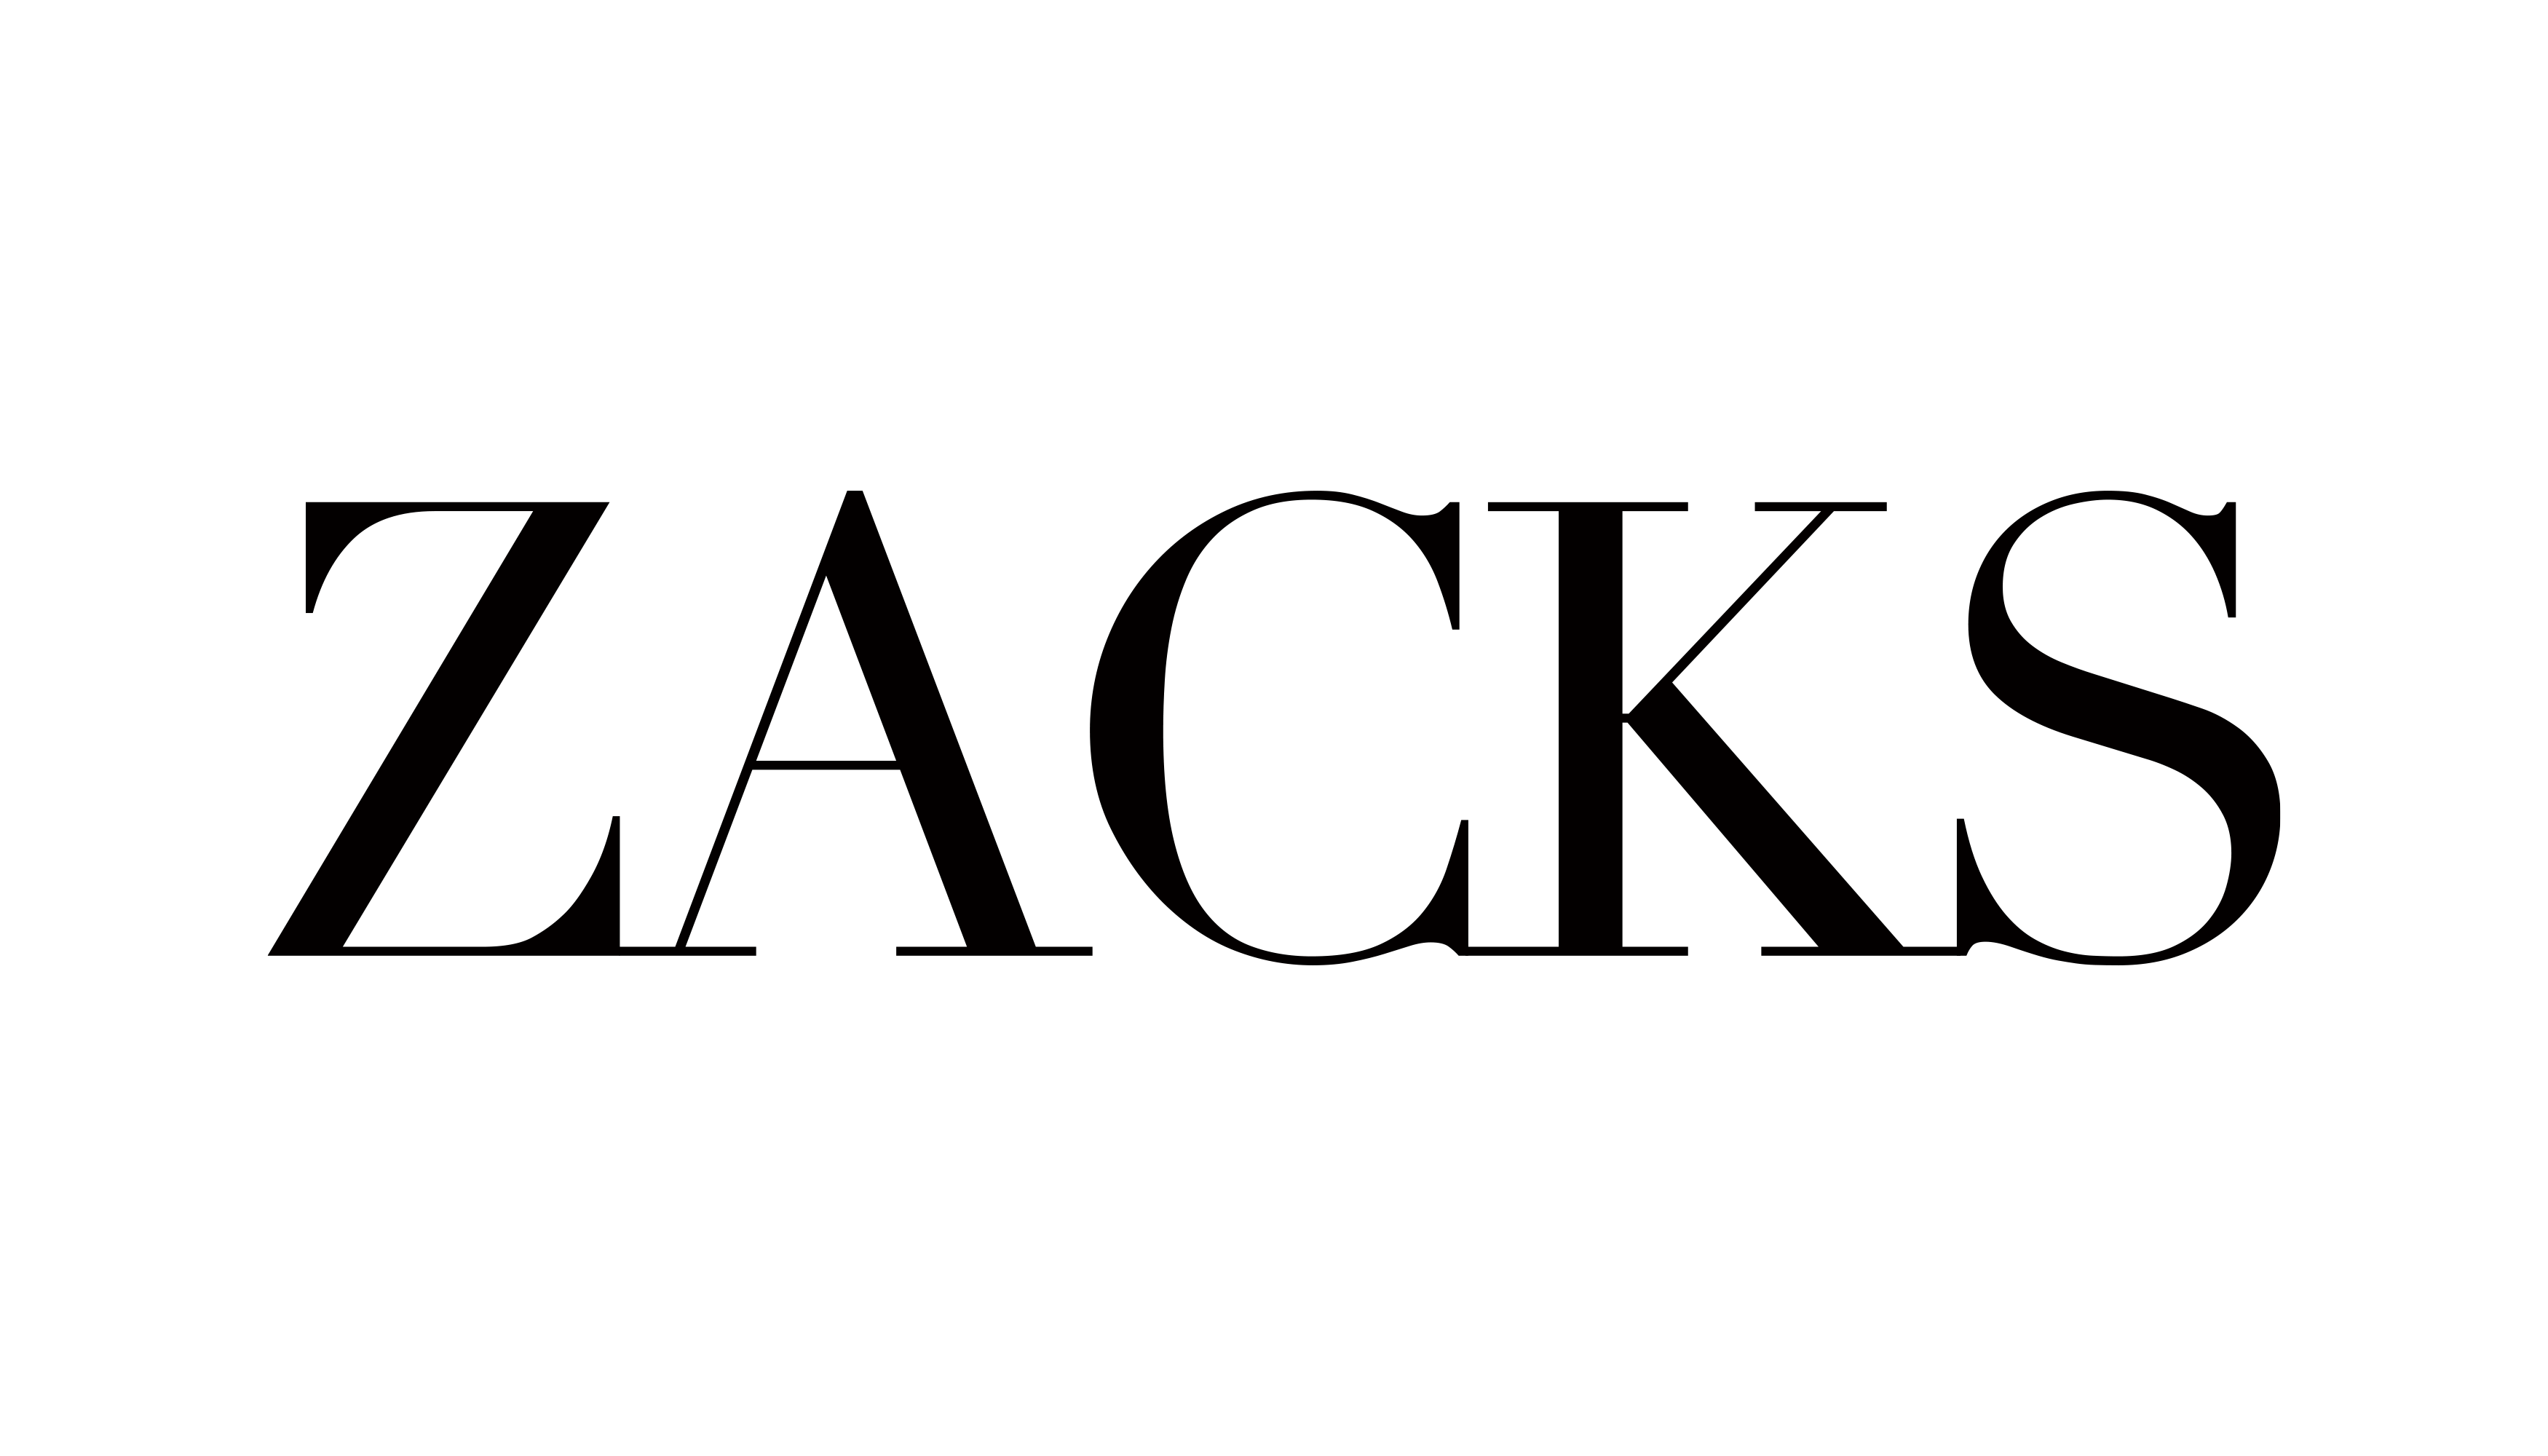 Zack’s Fashions logo